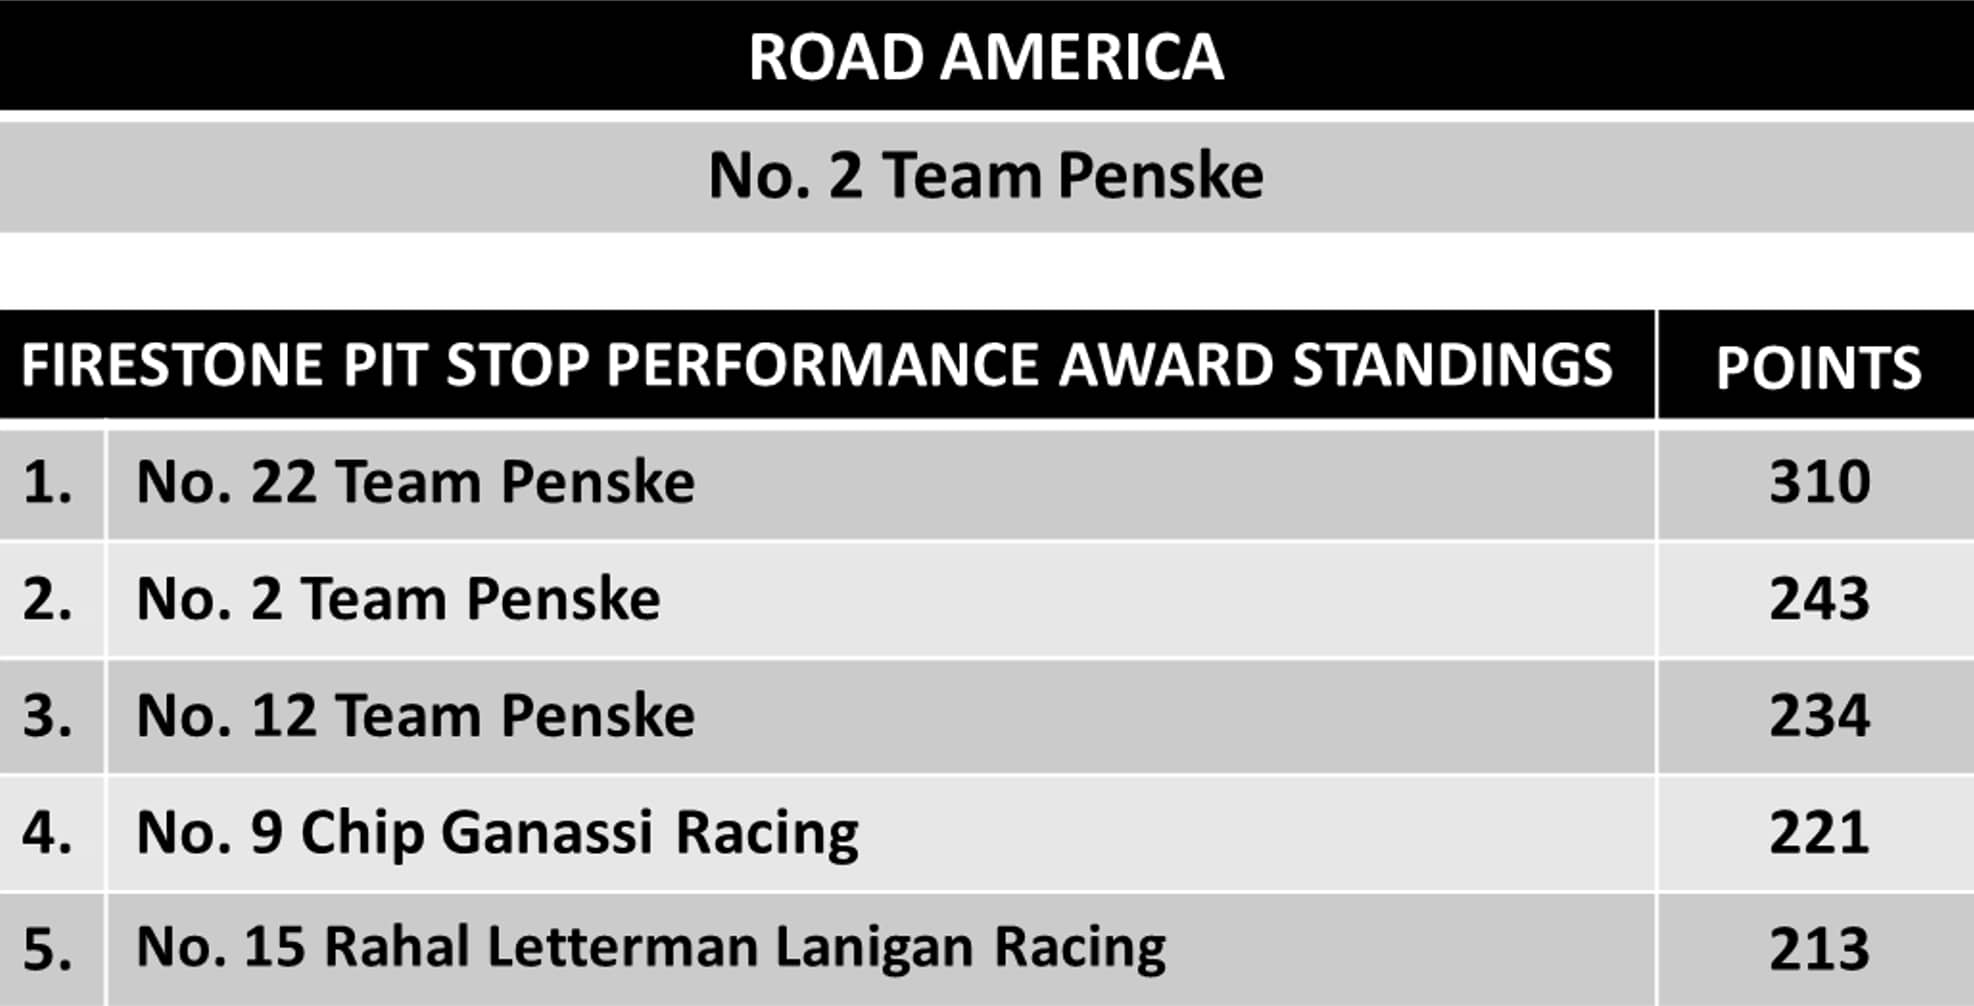 Ohio Performance Standings